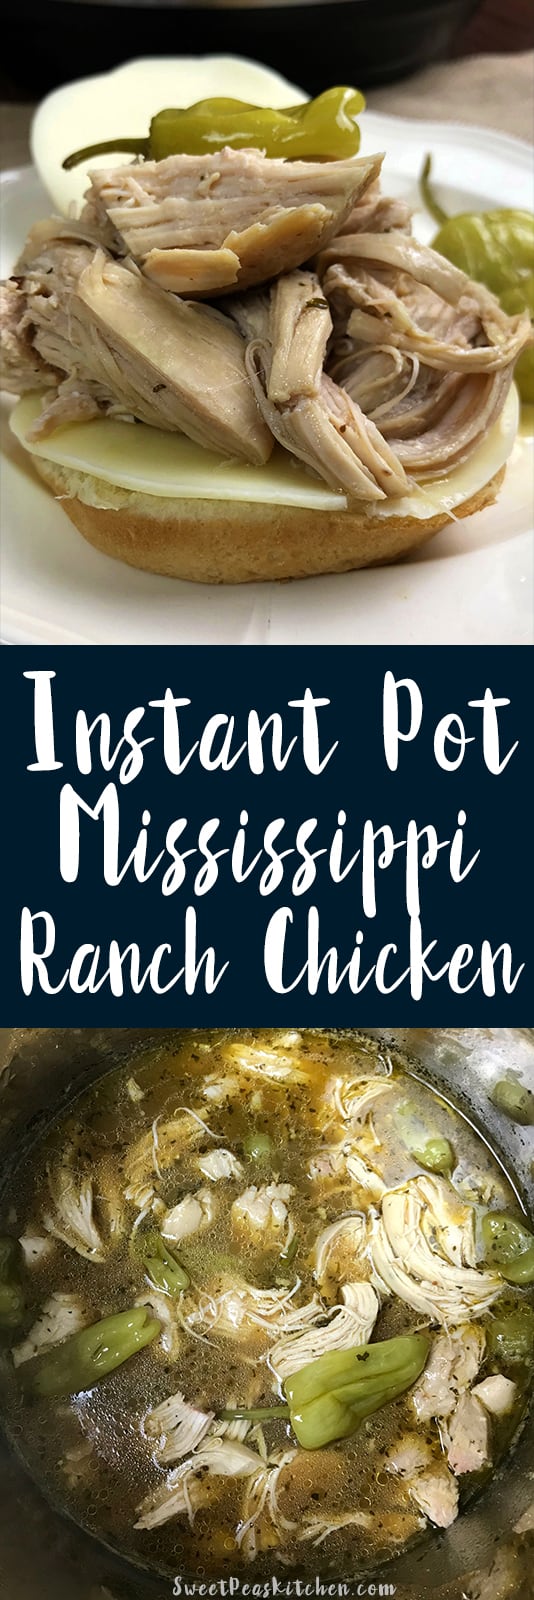 Instant Pot Mississippi Ranch Chicken